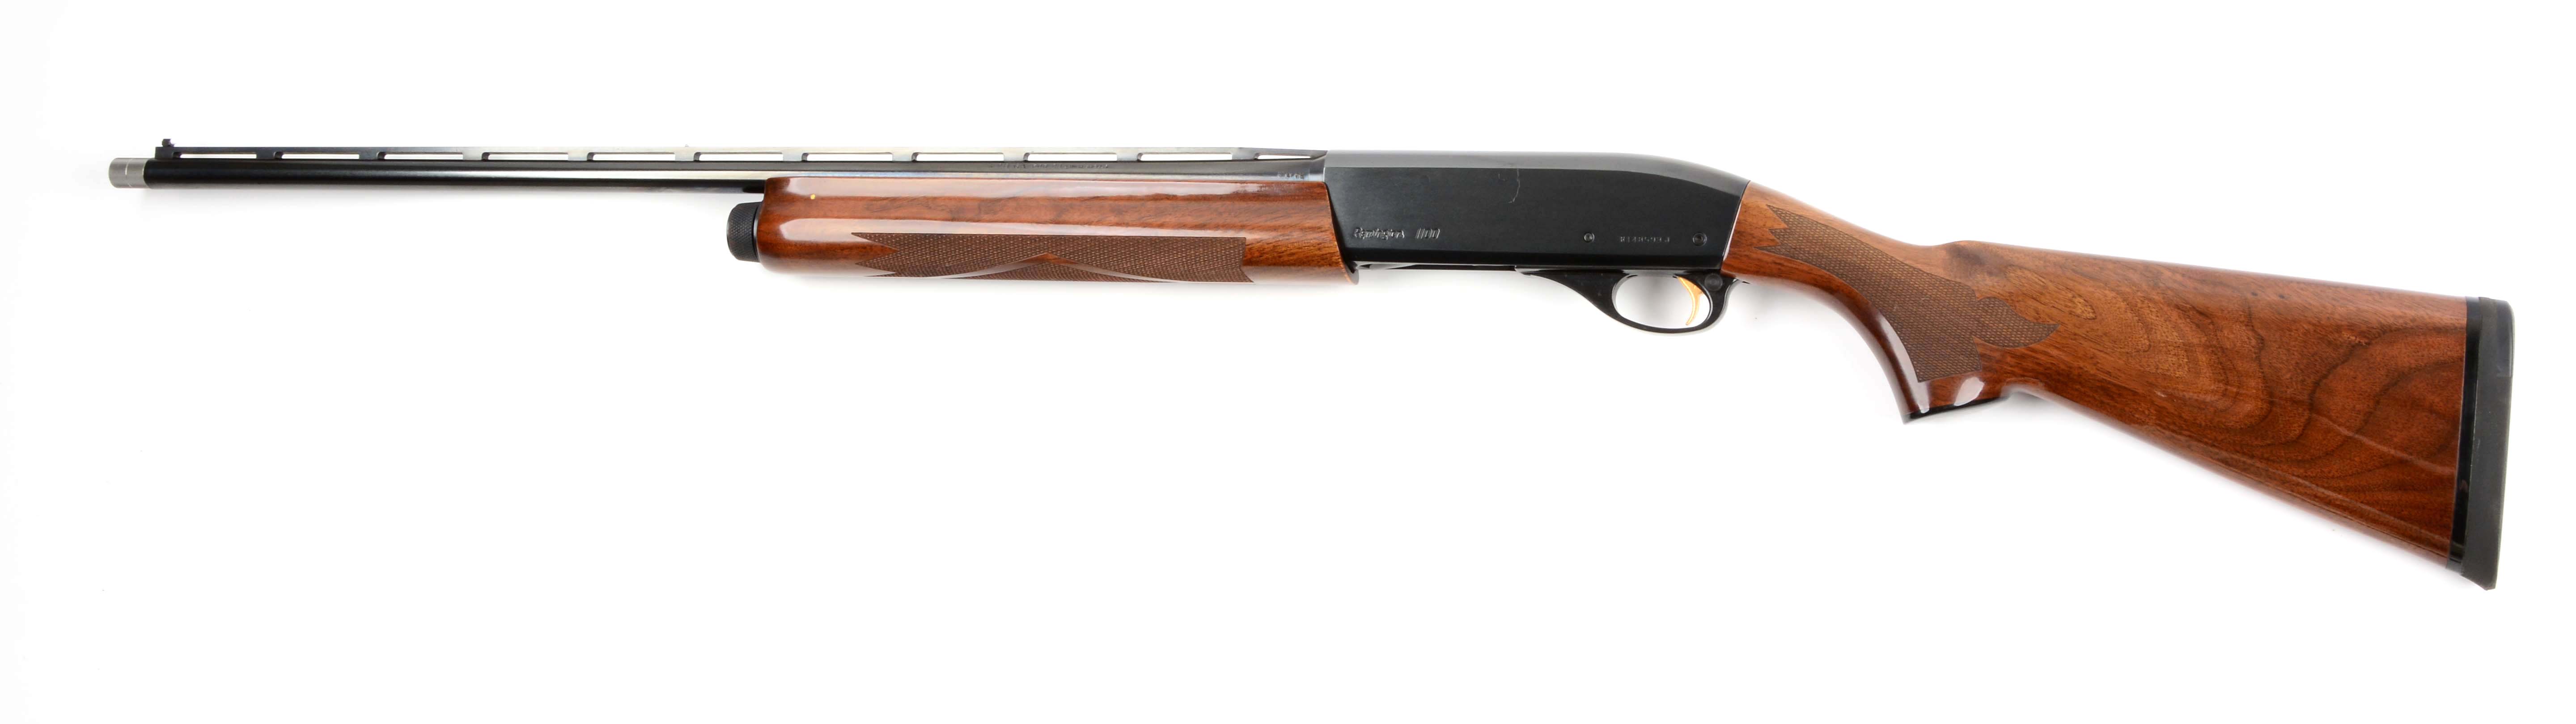 M) remington model 1100 semi-automatic shotgun 28 bore. 